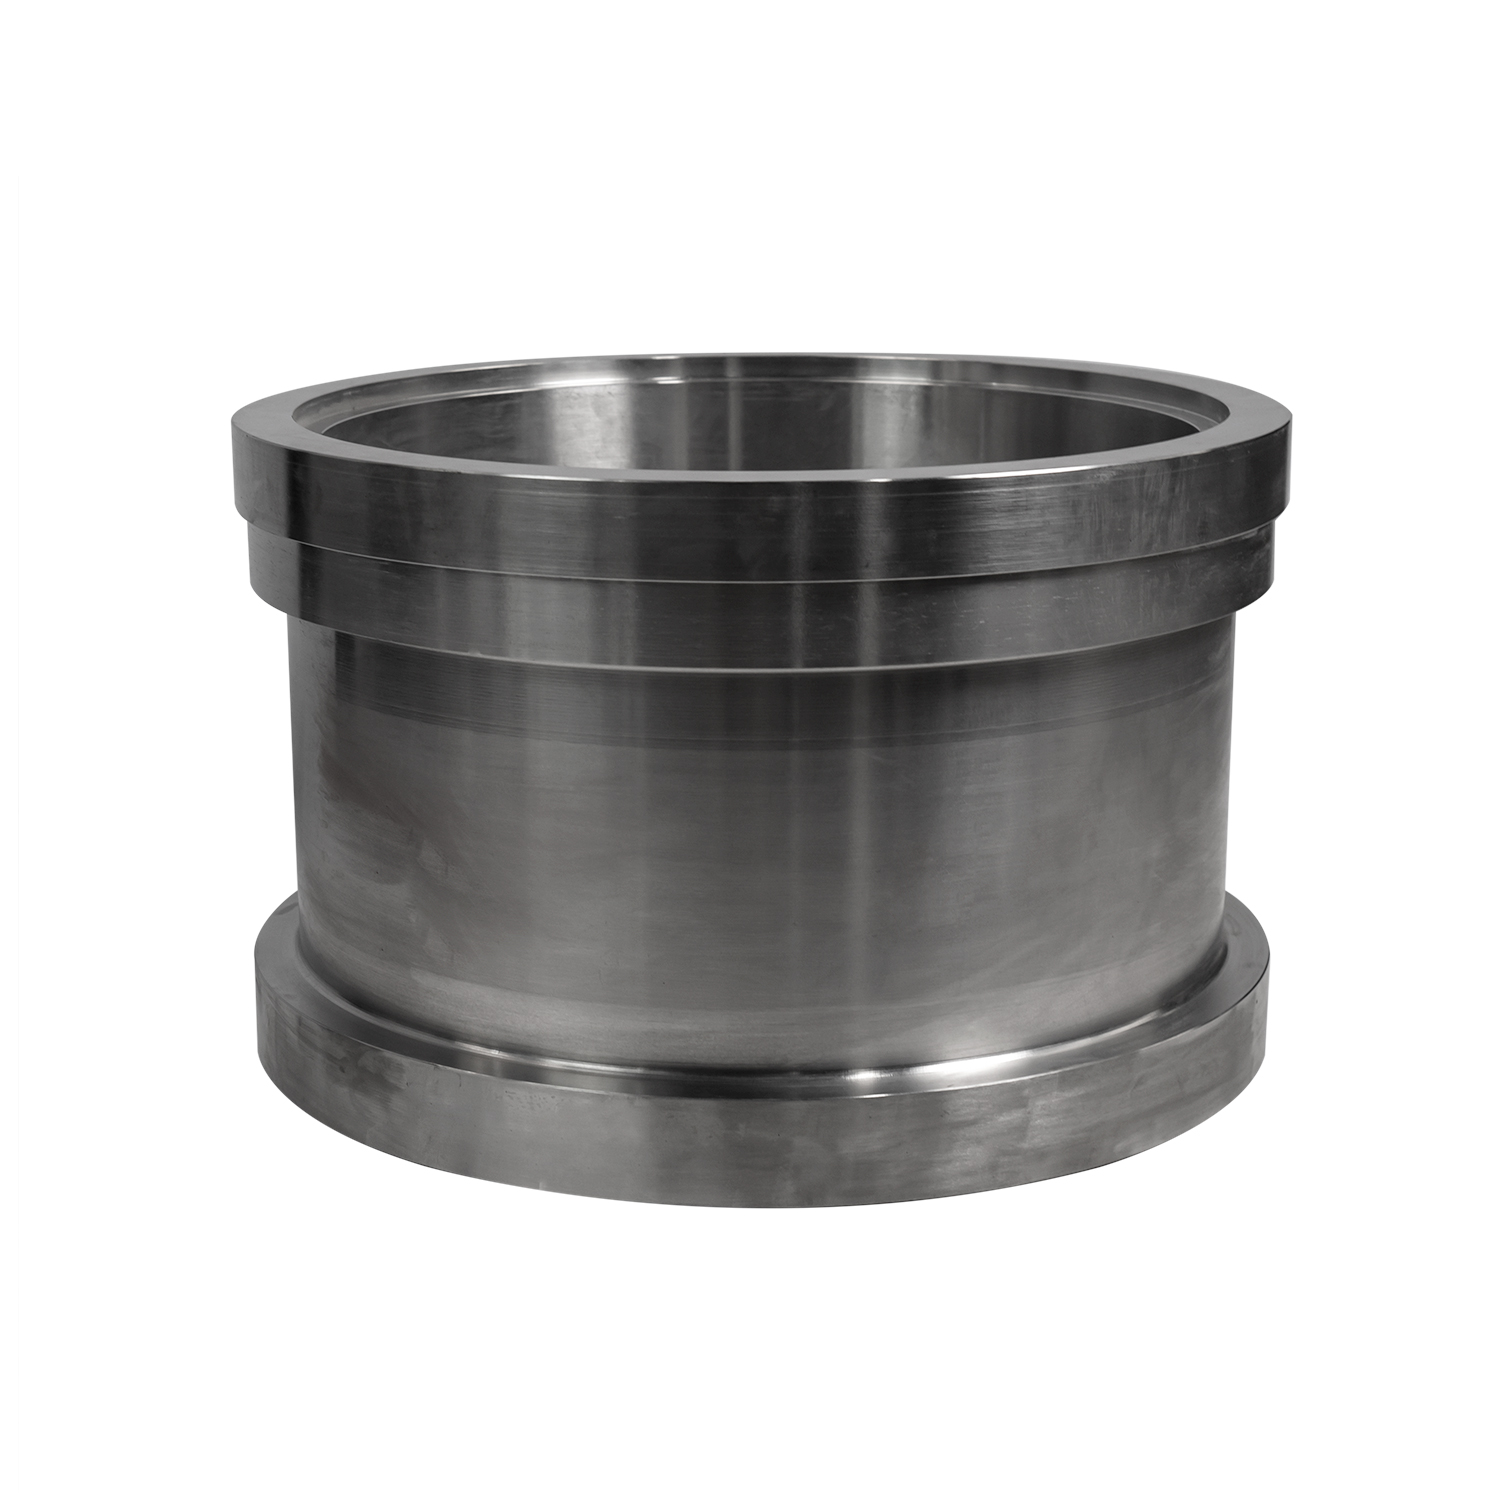 Stainless Steel Bowl for Centrifuge